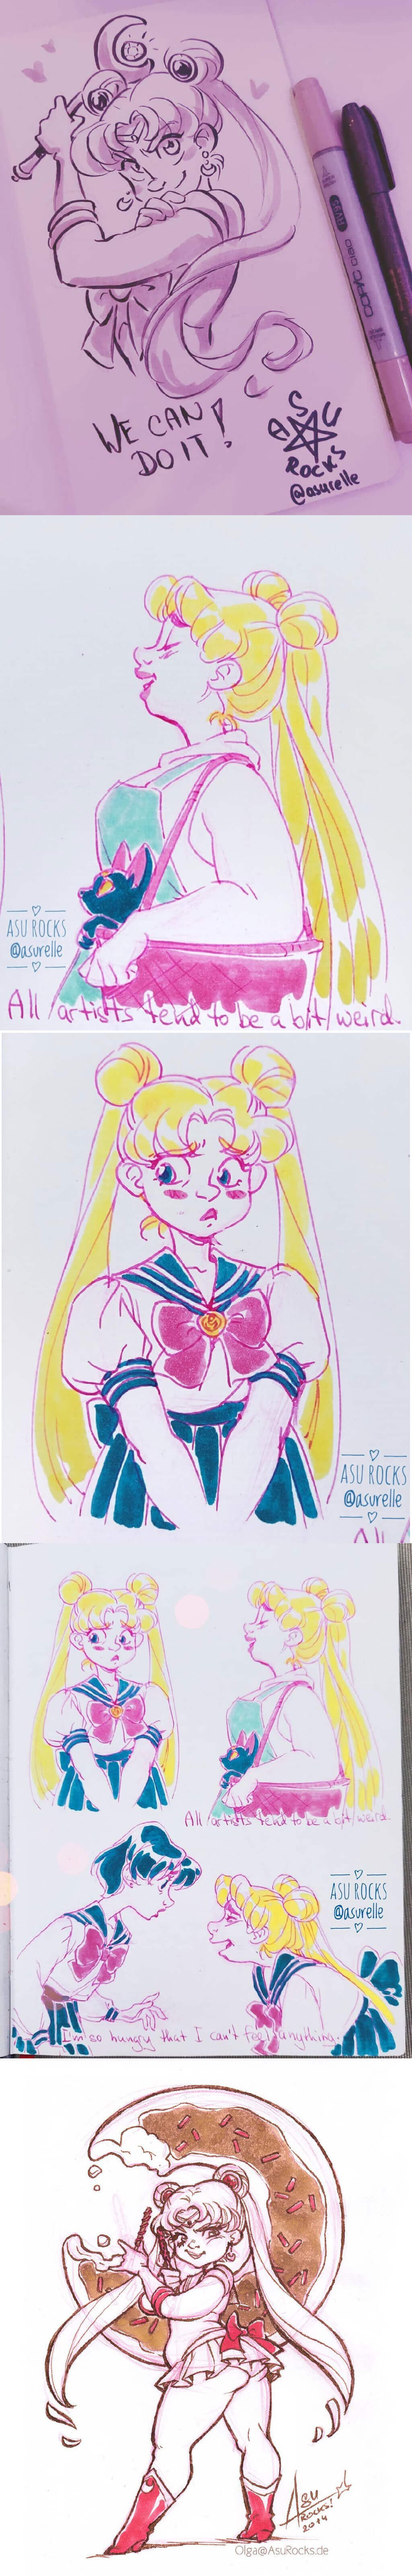 Sailor Moon Fanart by Olga “AsuROCKS” Andriyenko